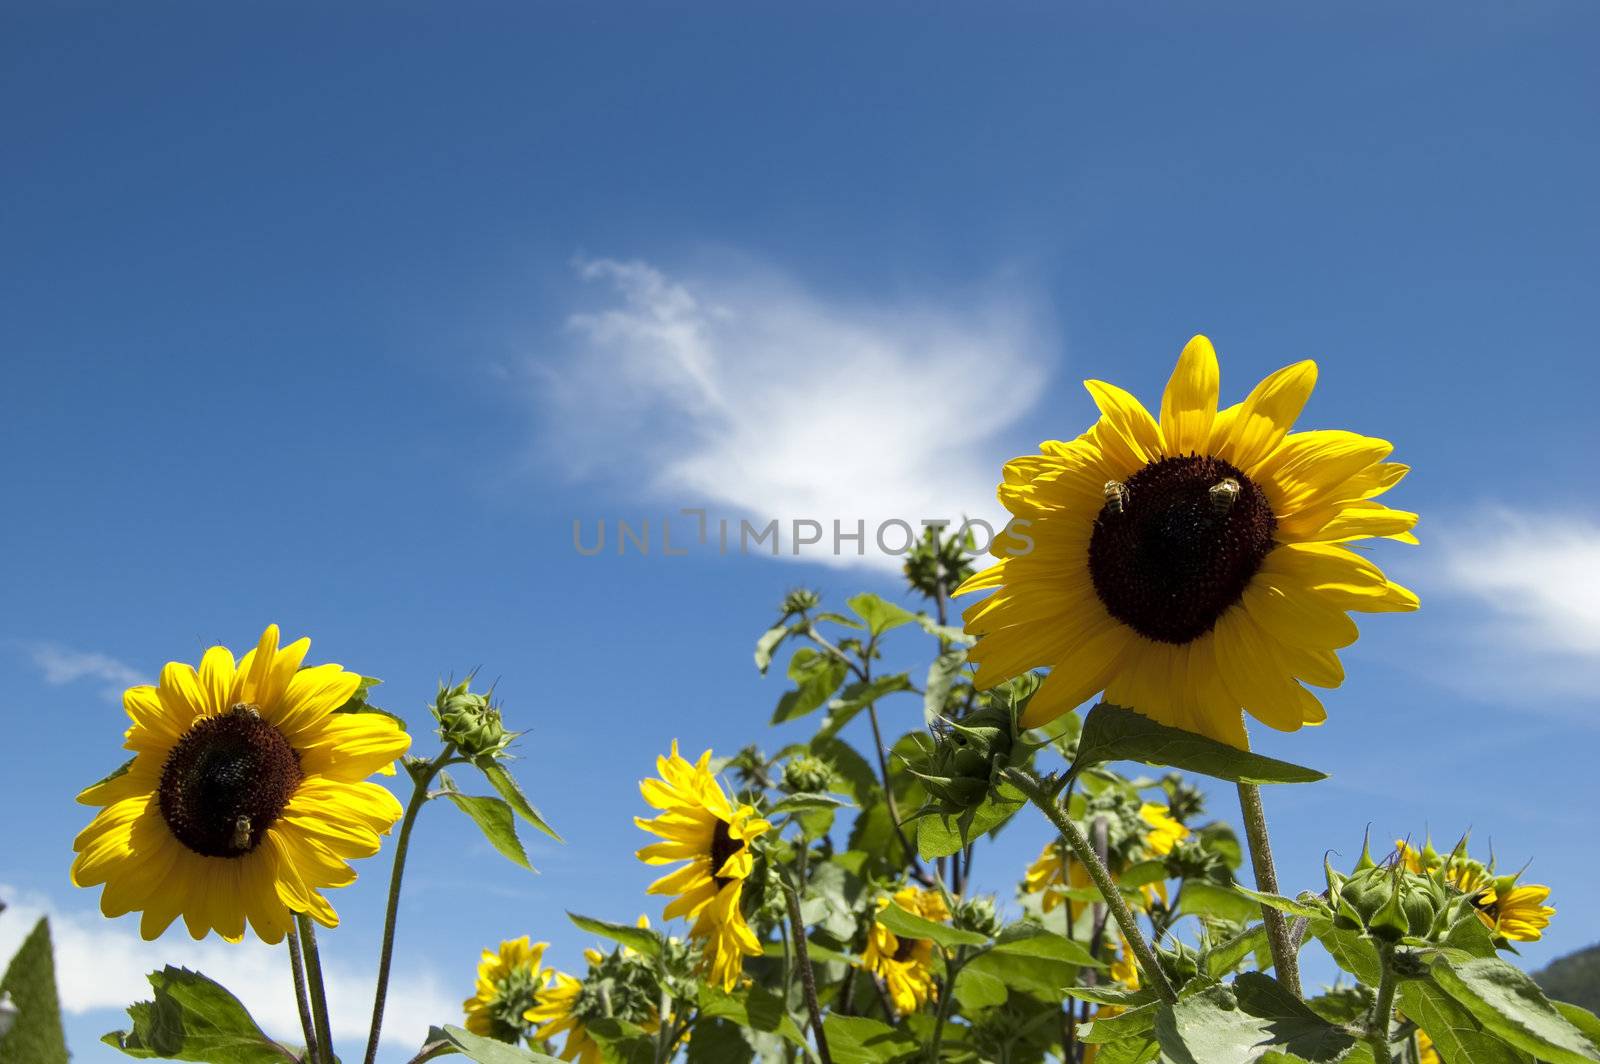 Many sunflower